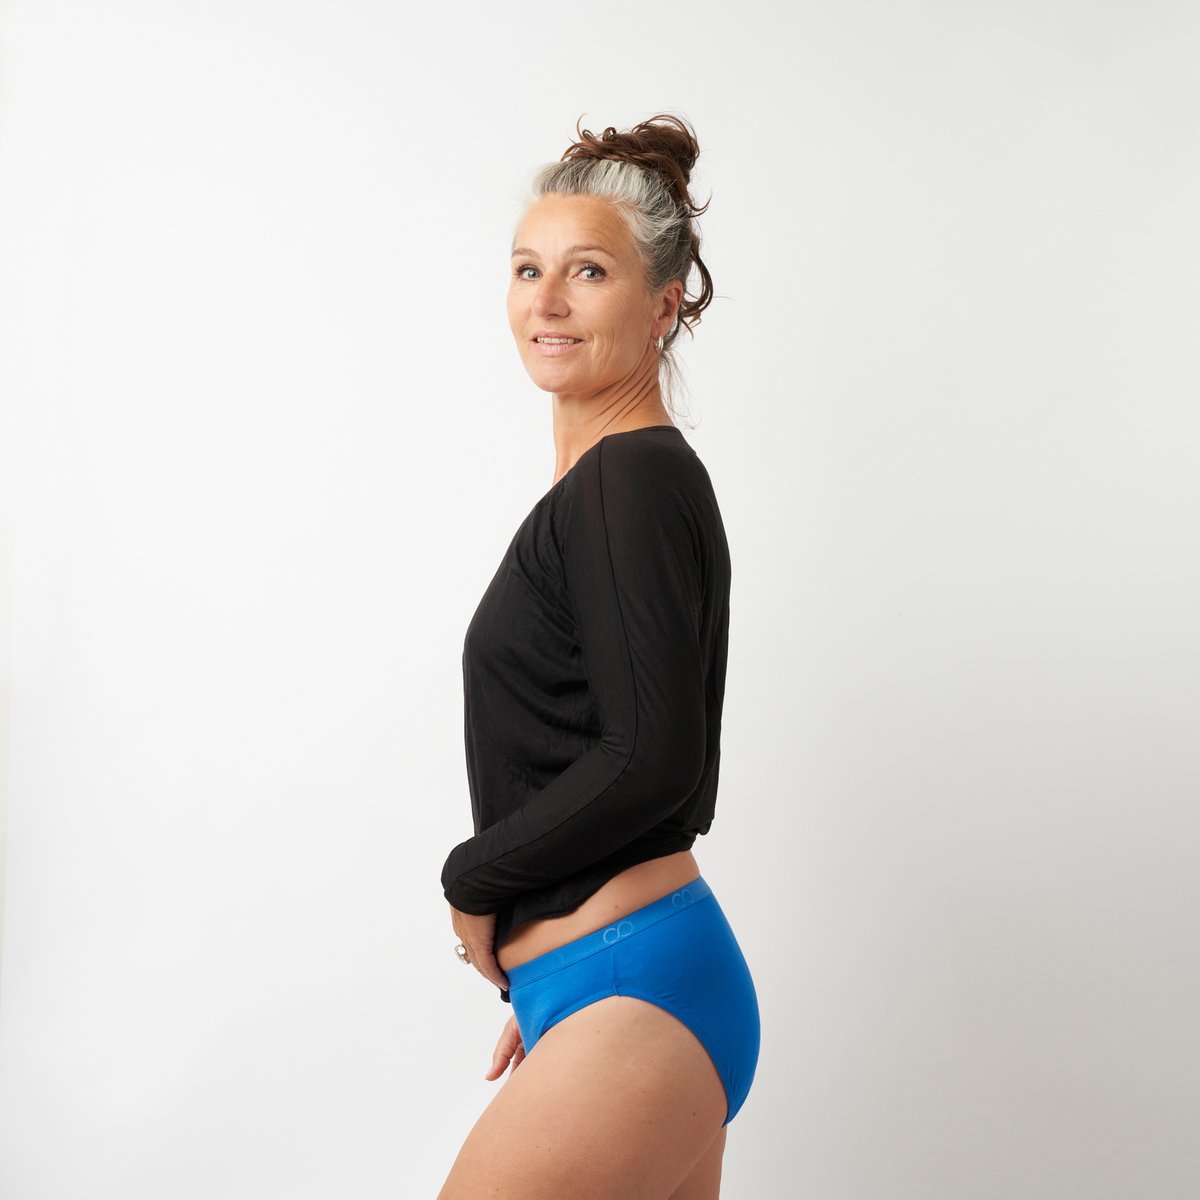 Moodies Undies menstruatie & incontinentie ondergoed - Bamboe Bikini model Broekje - moderate kruisje - Blauw - maat M